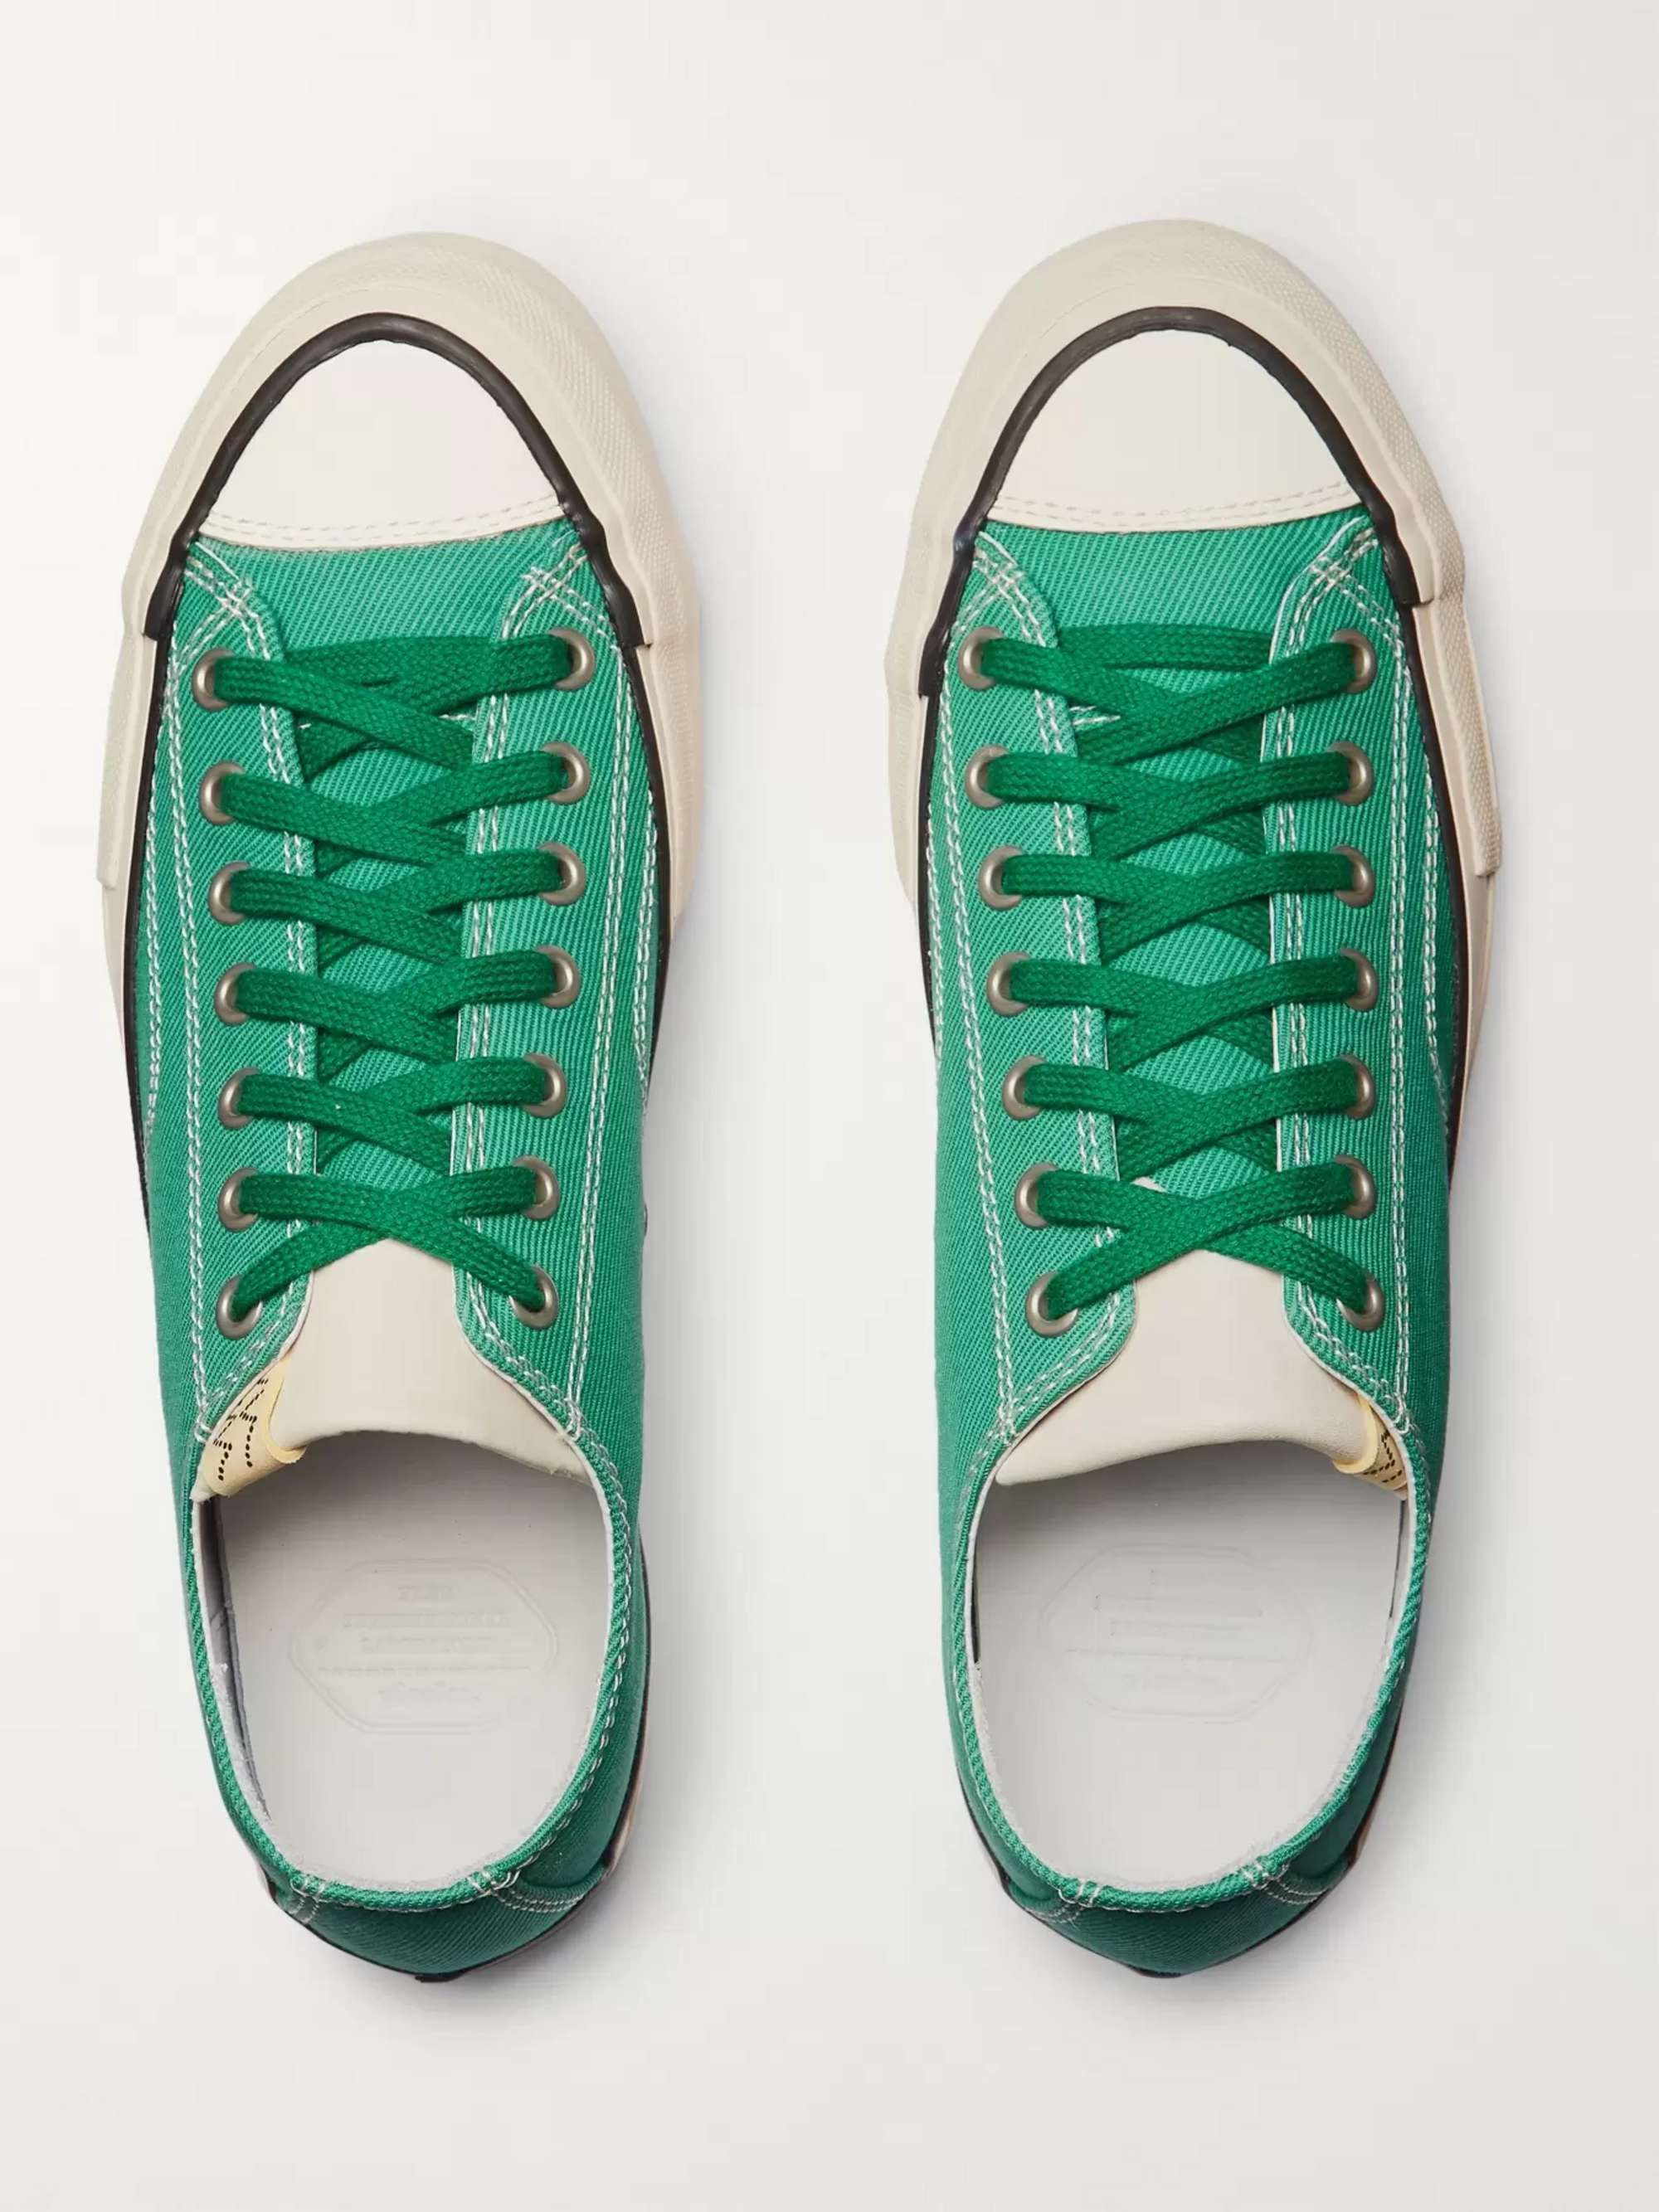 VISVIM Skagway Leather-Trimmed Canvas Sneakers